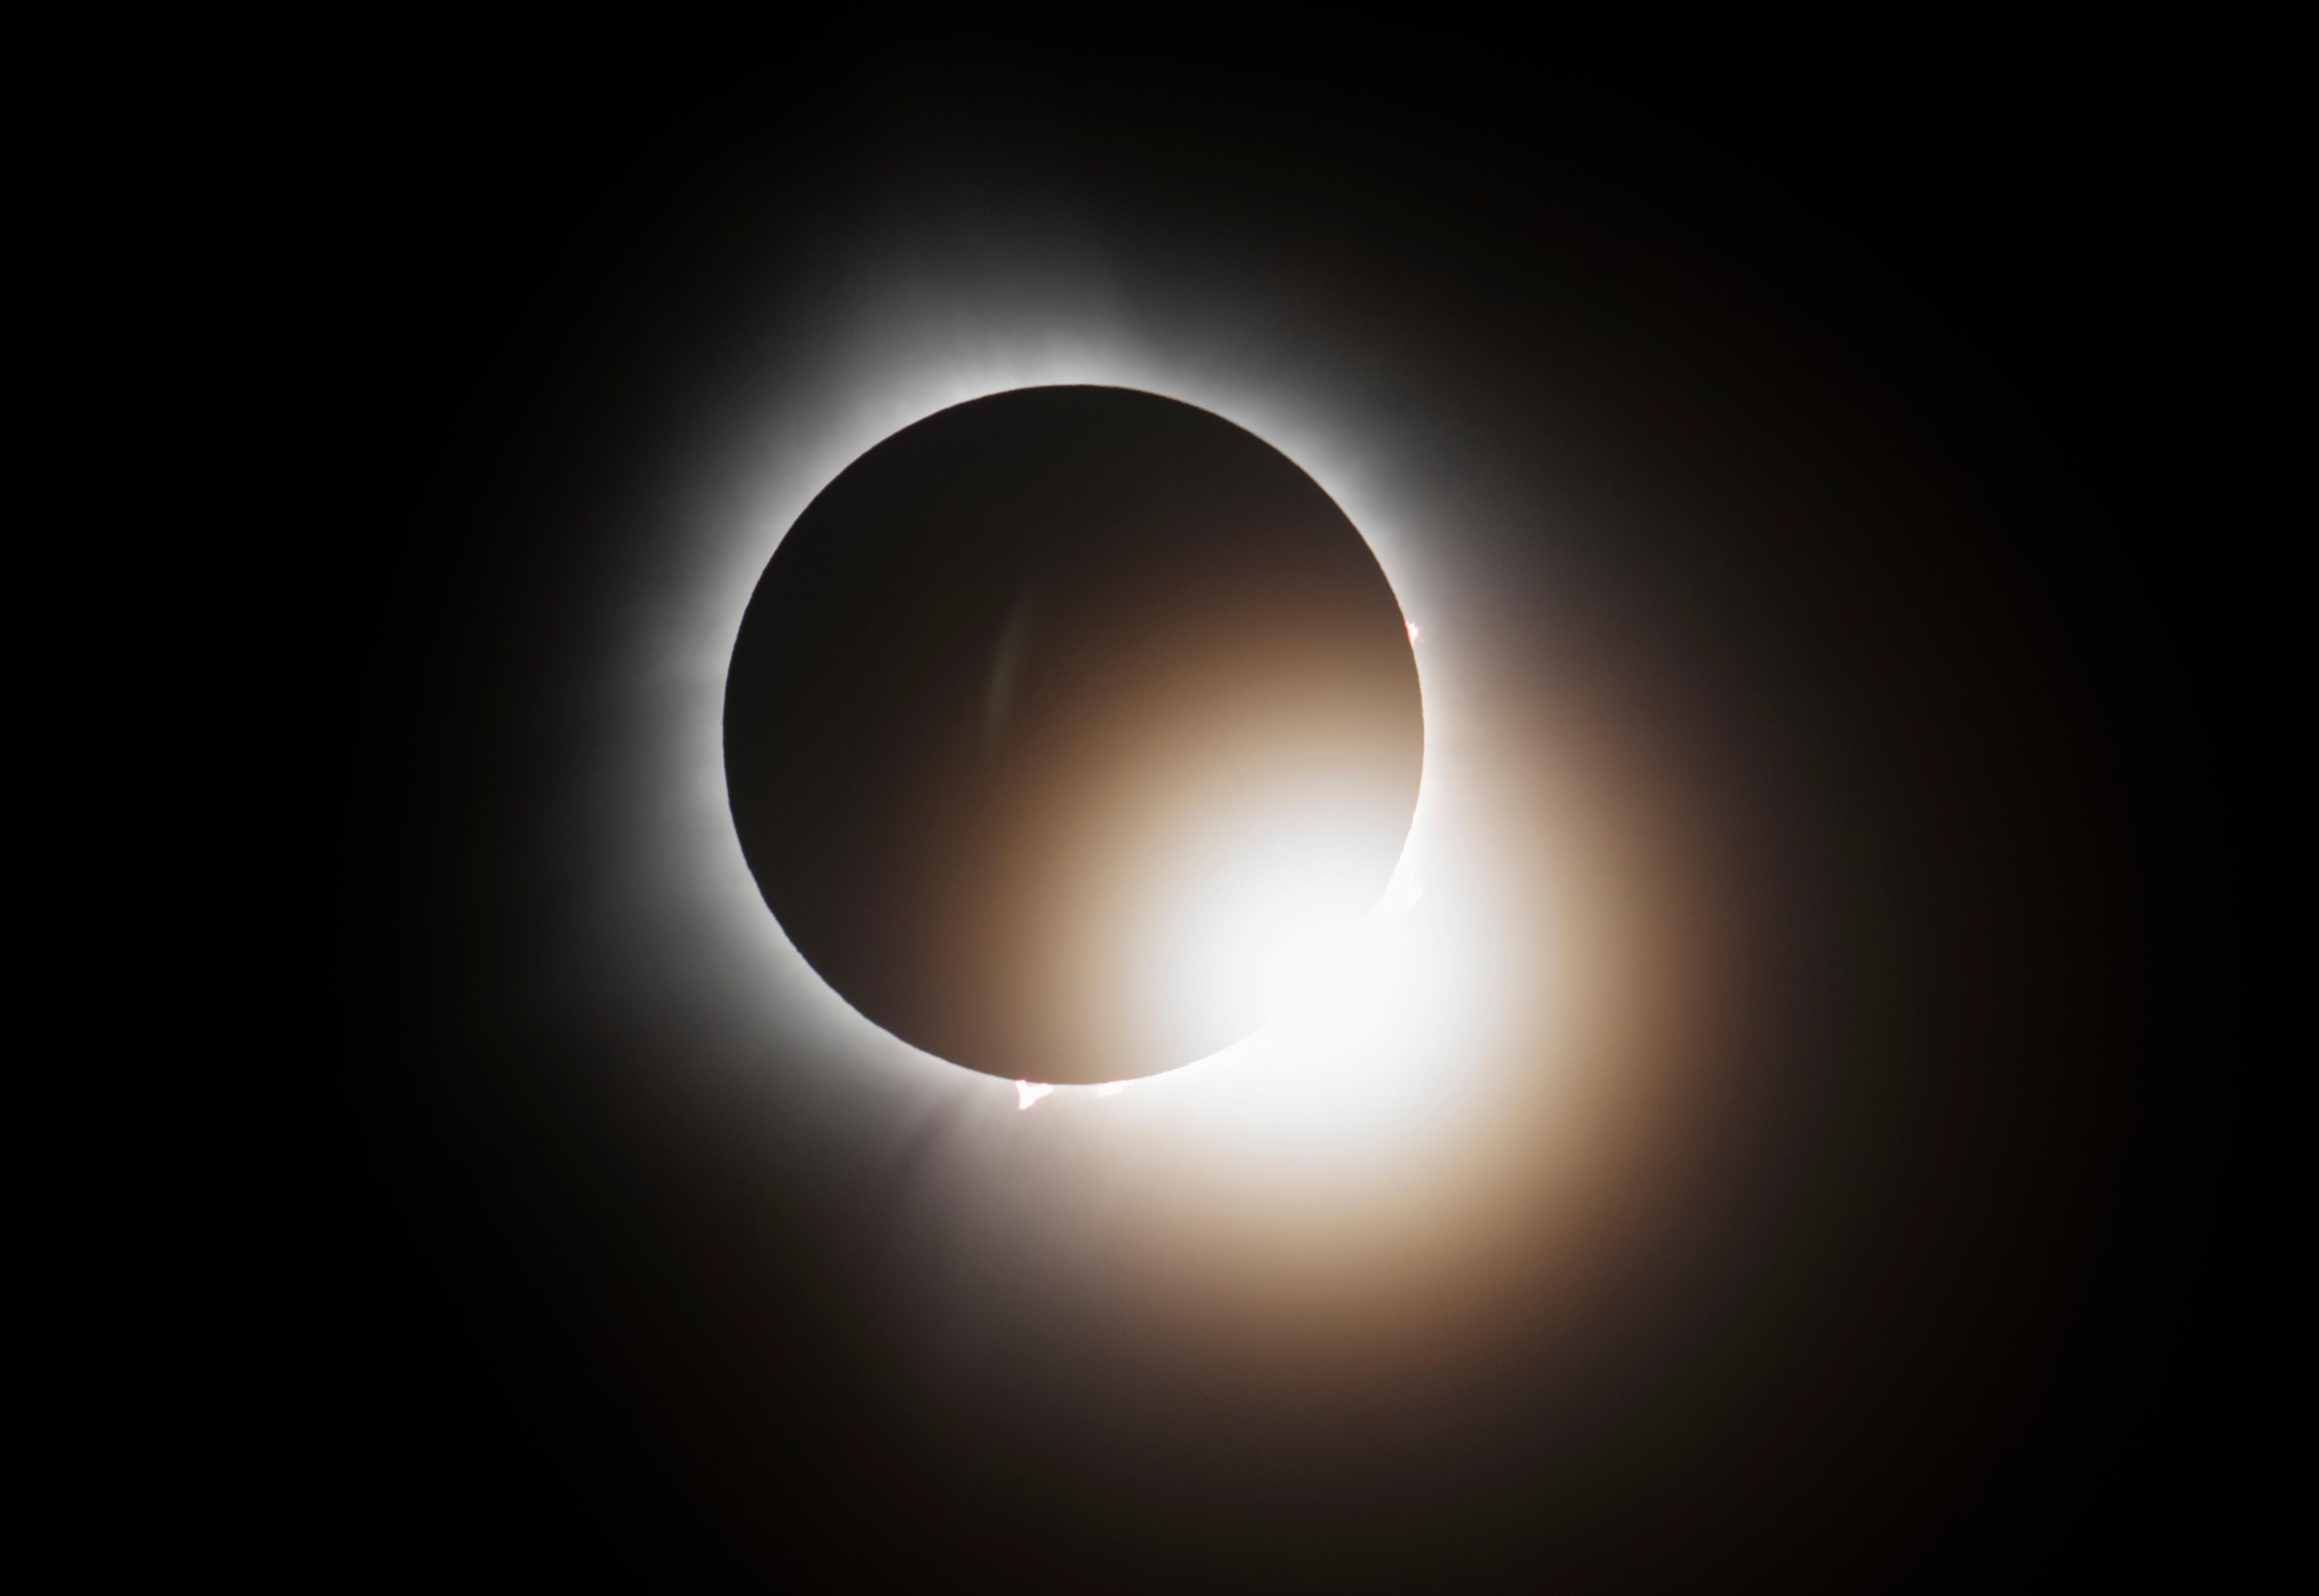 In Photos: Solar Eclipse Crosses North America